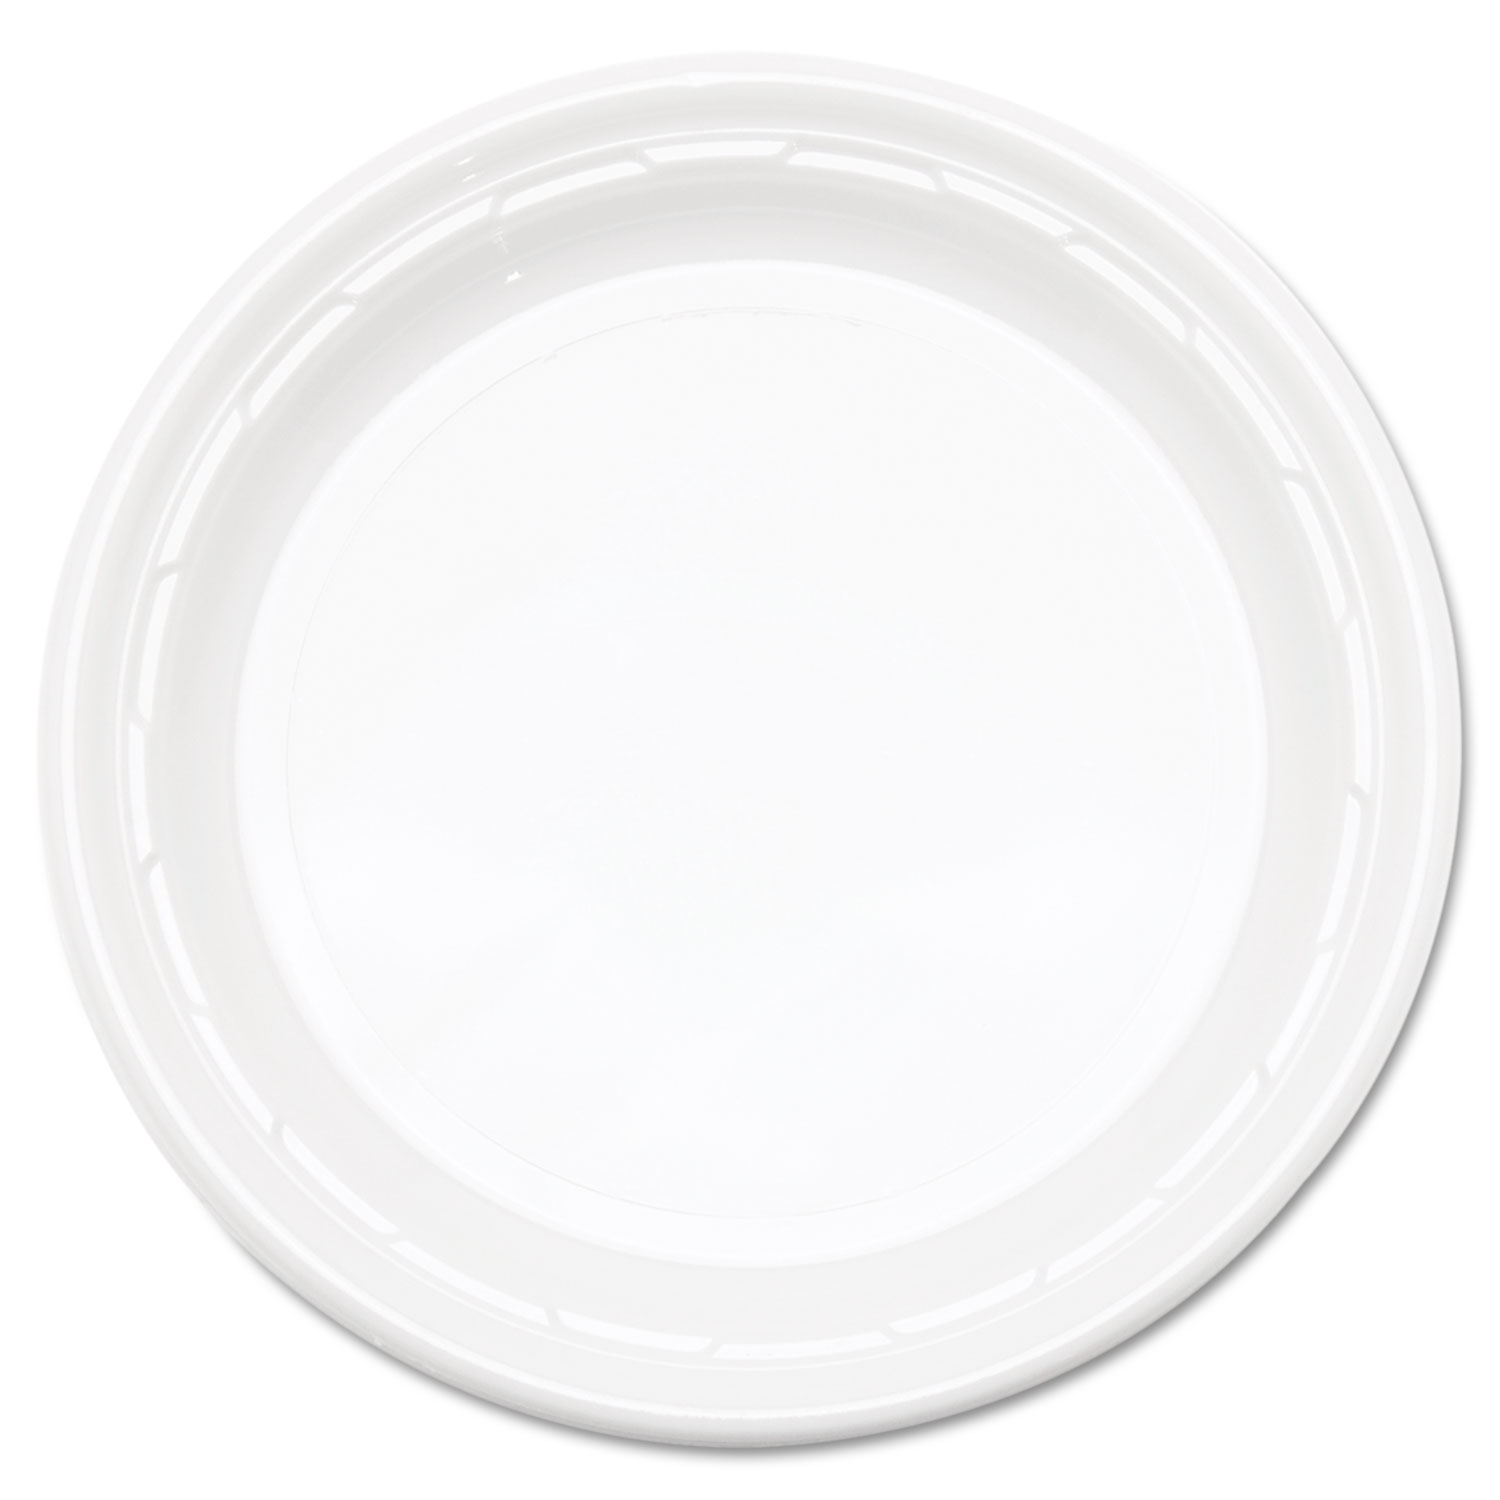  Dart 9PWF Famous Service Plastic Dinnerware, Plate, 9, White, 125/Pack, 4 Packs/Carton (DCC9PWF) 